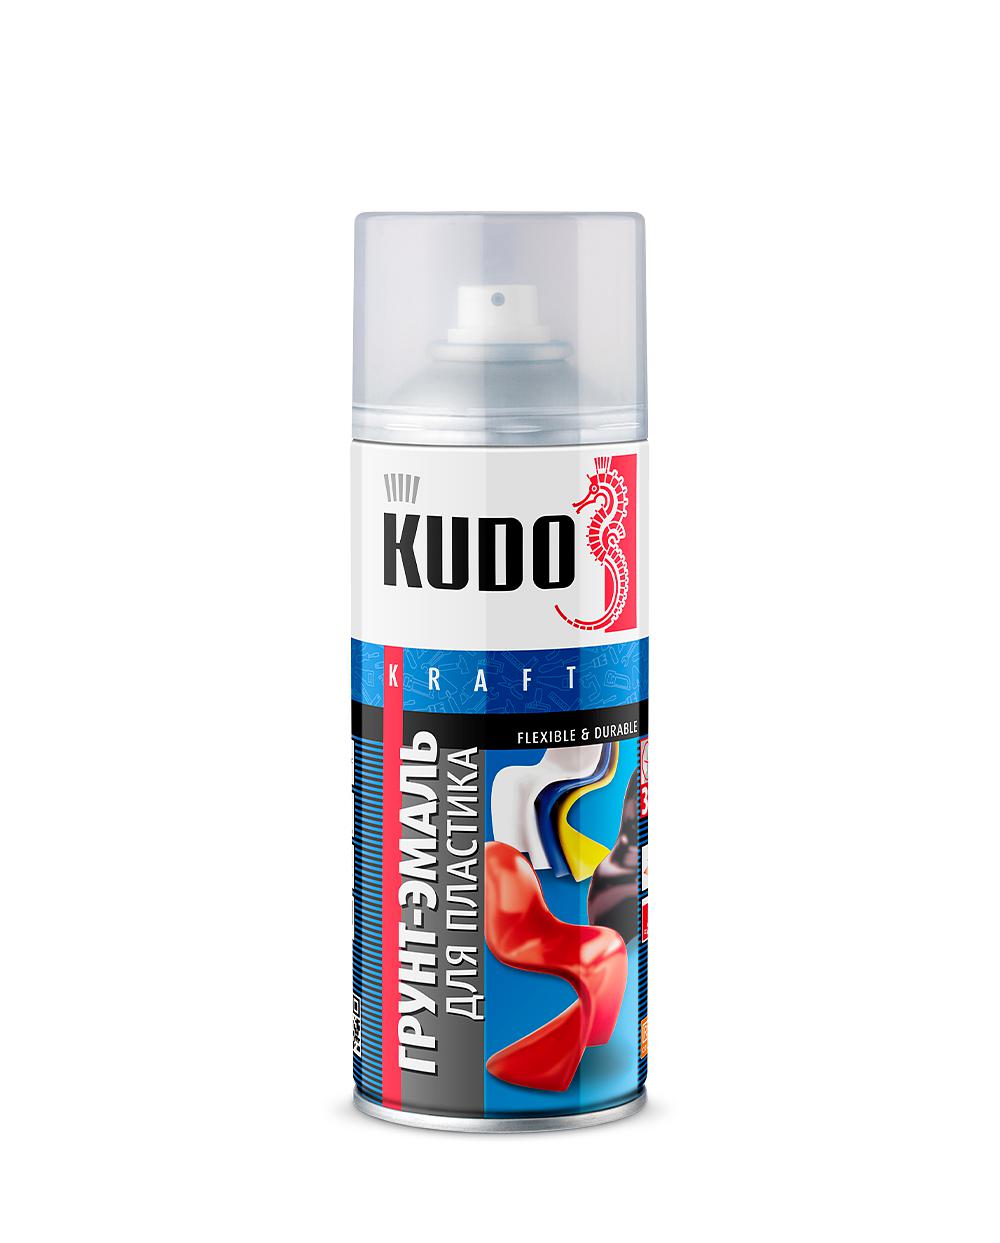 Грунт по пластику "KUDO", серый, спрей, 520мл